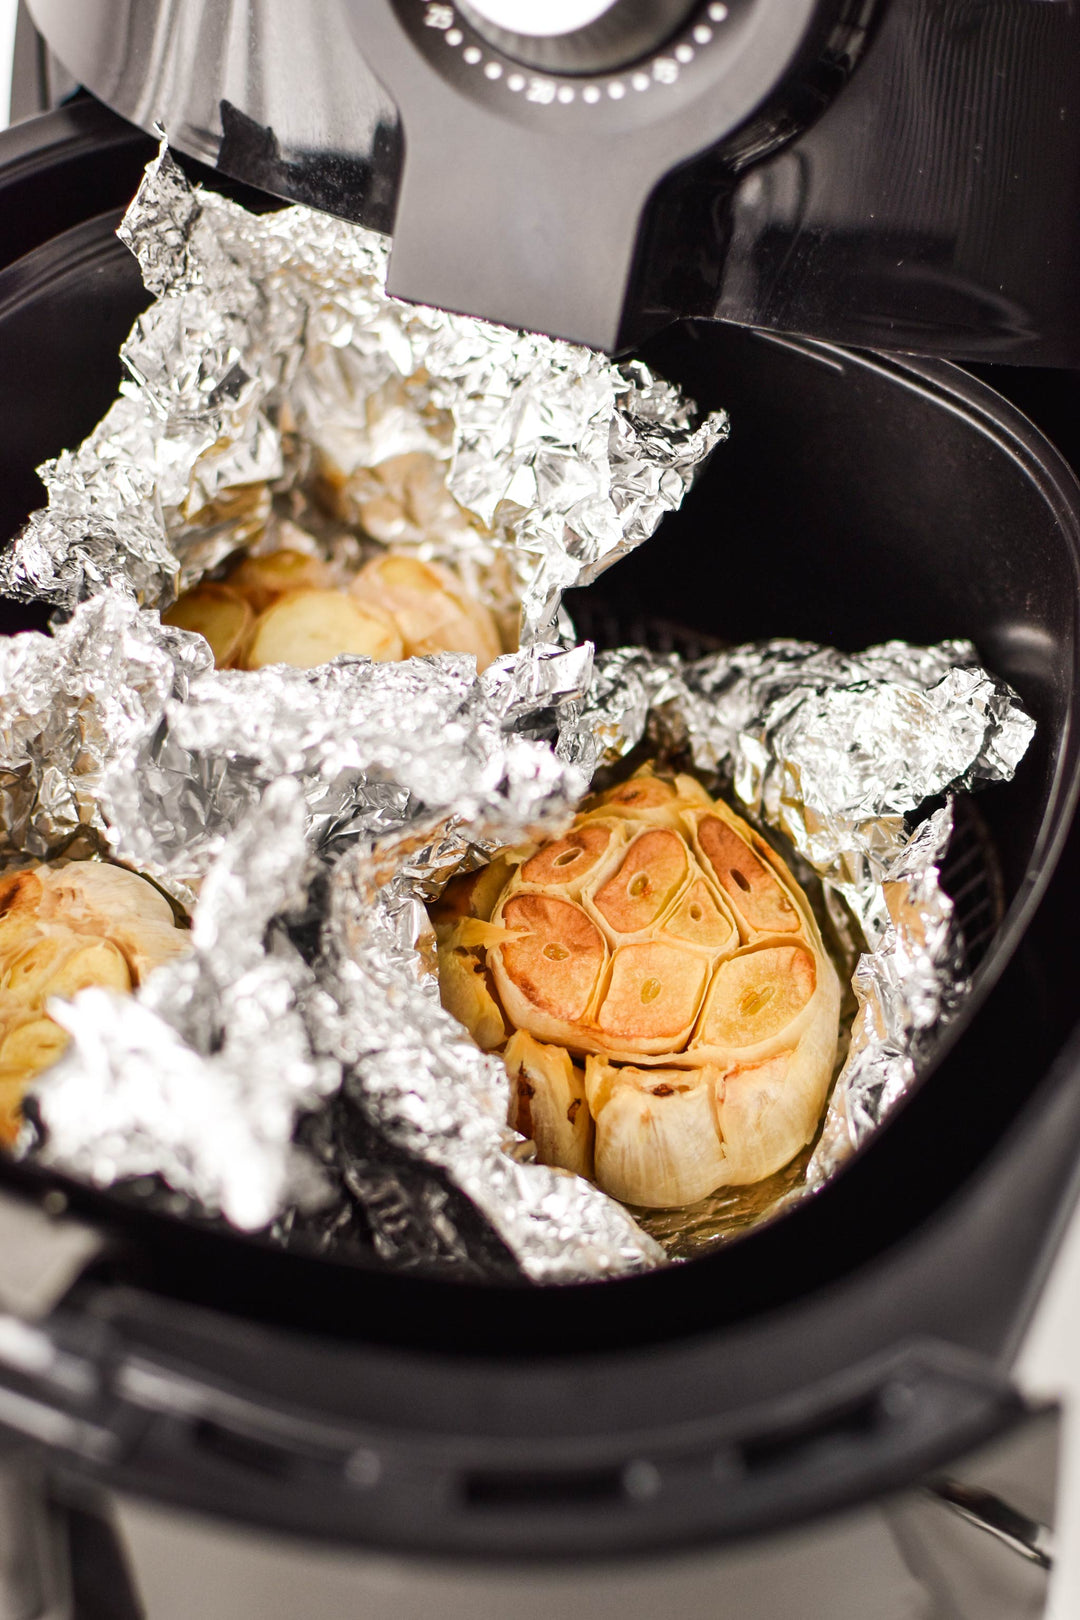 Can you put Aluminum Foil in an Air Fryer?